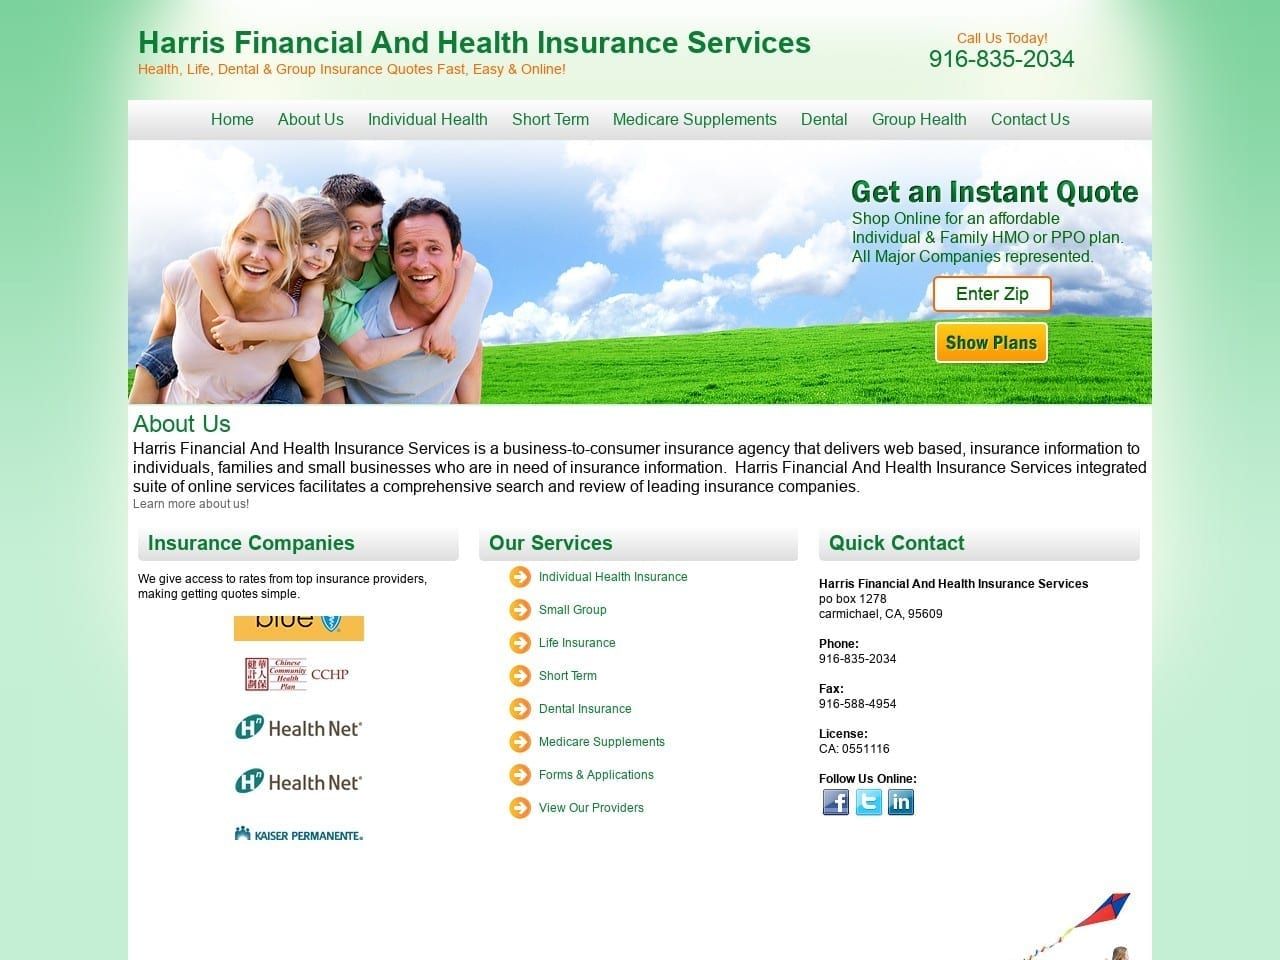 Garry Harris Health Insurance Agency Website Screenshot from hfhinsurance.com